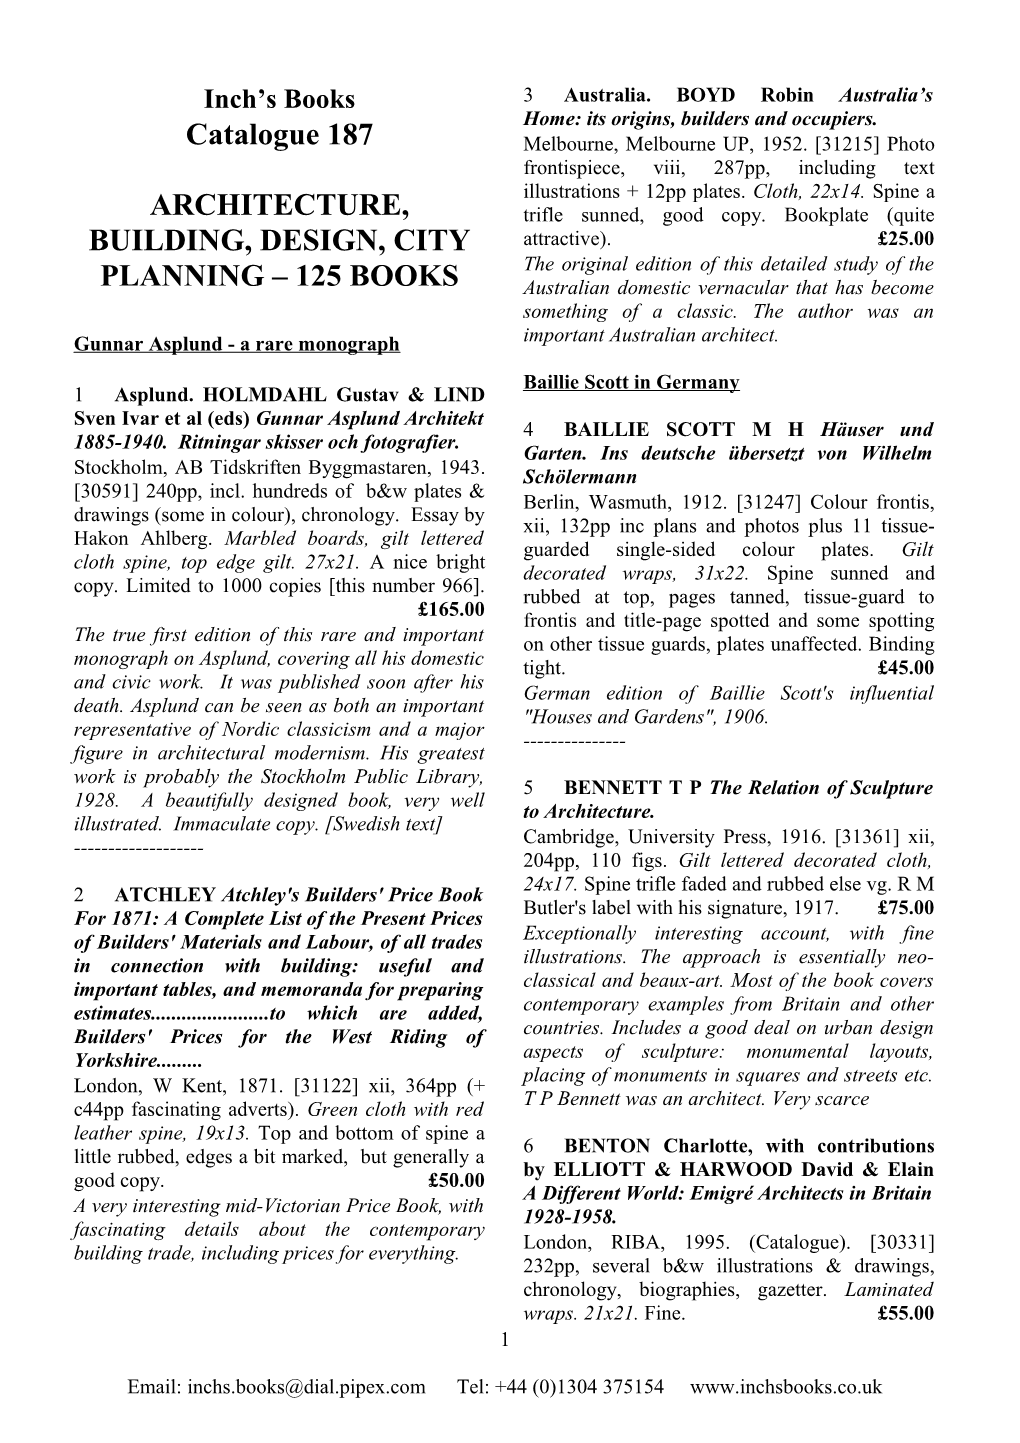 Architecture, Building, Design, City Planning 125 Books